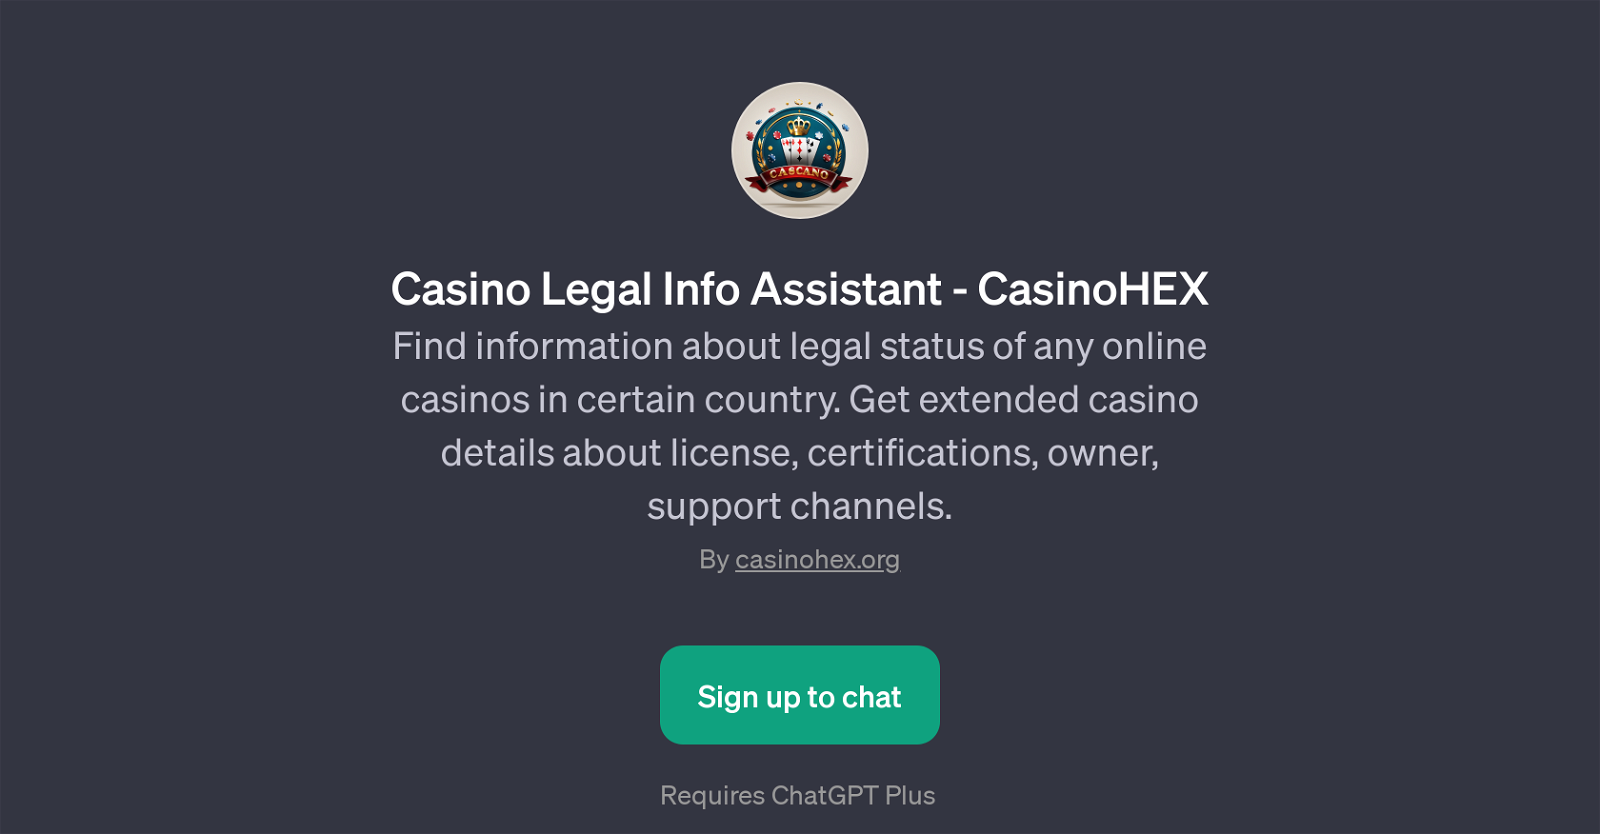 Casino Legal Info Assistant - CasinoHEX website